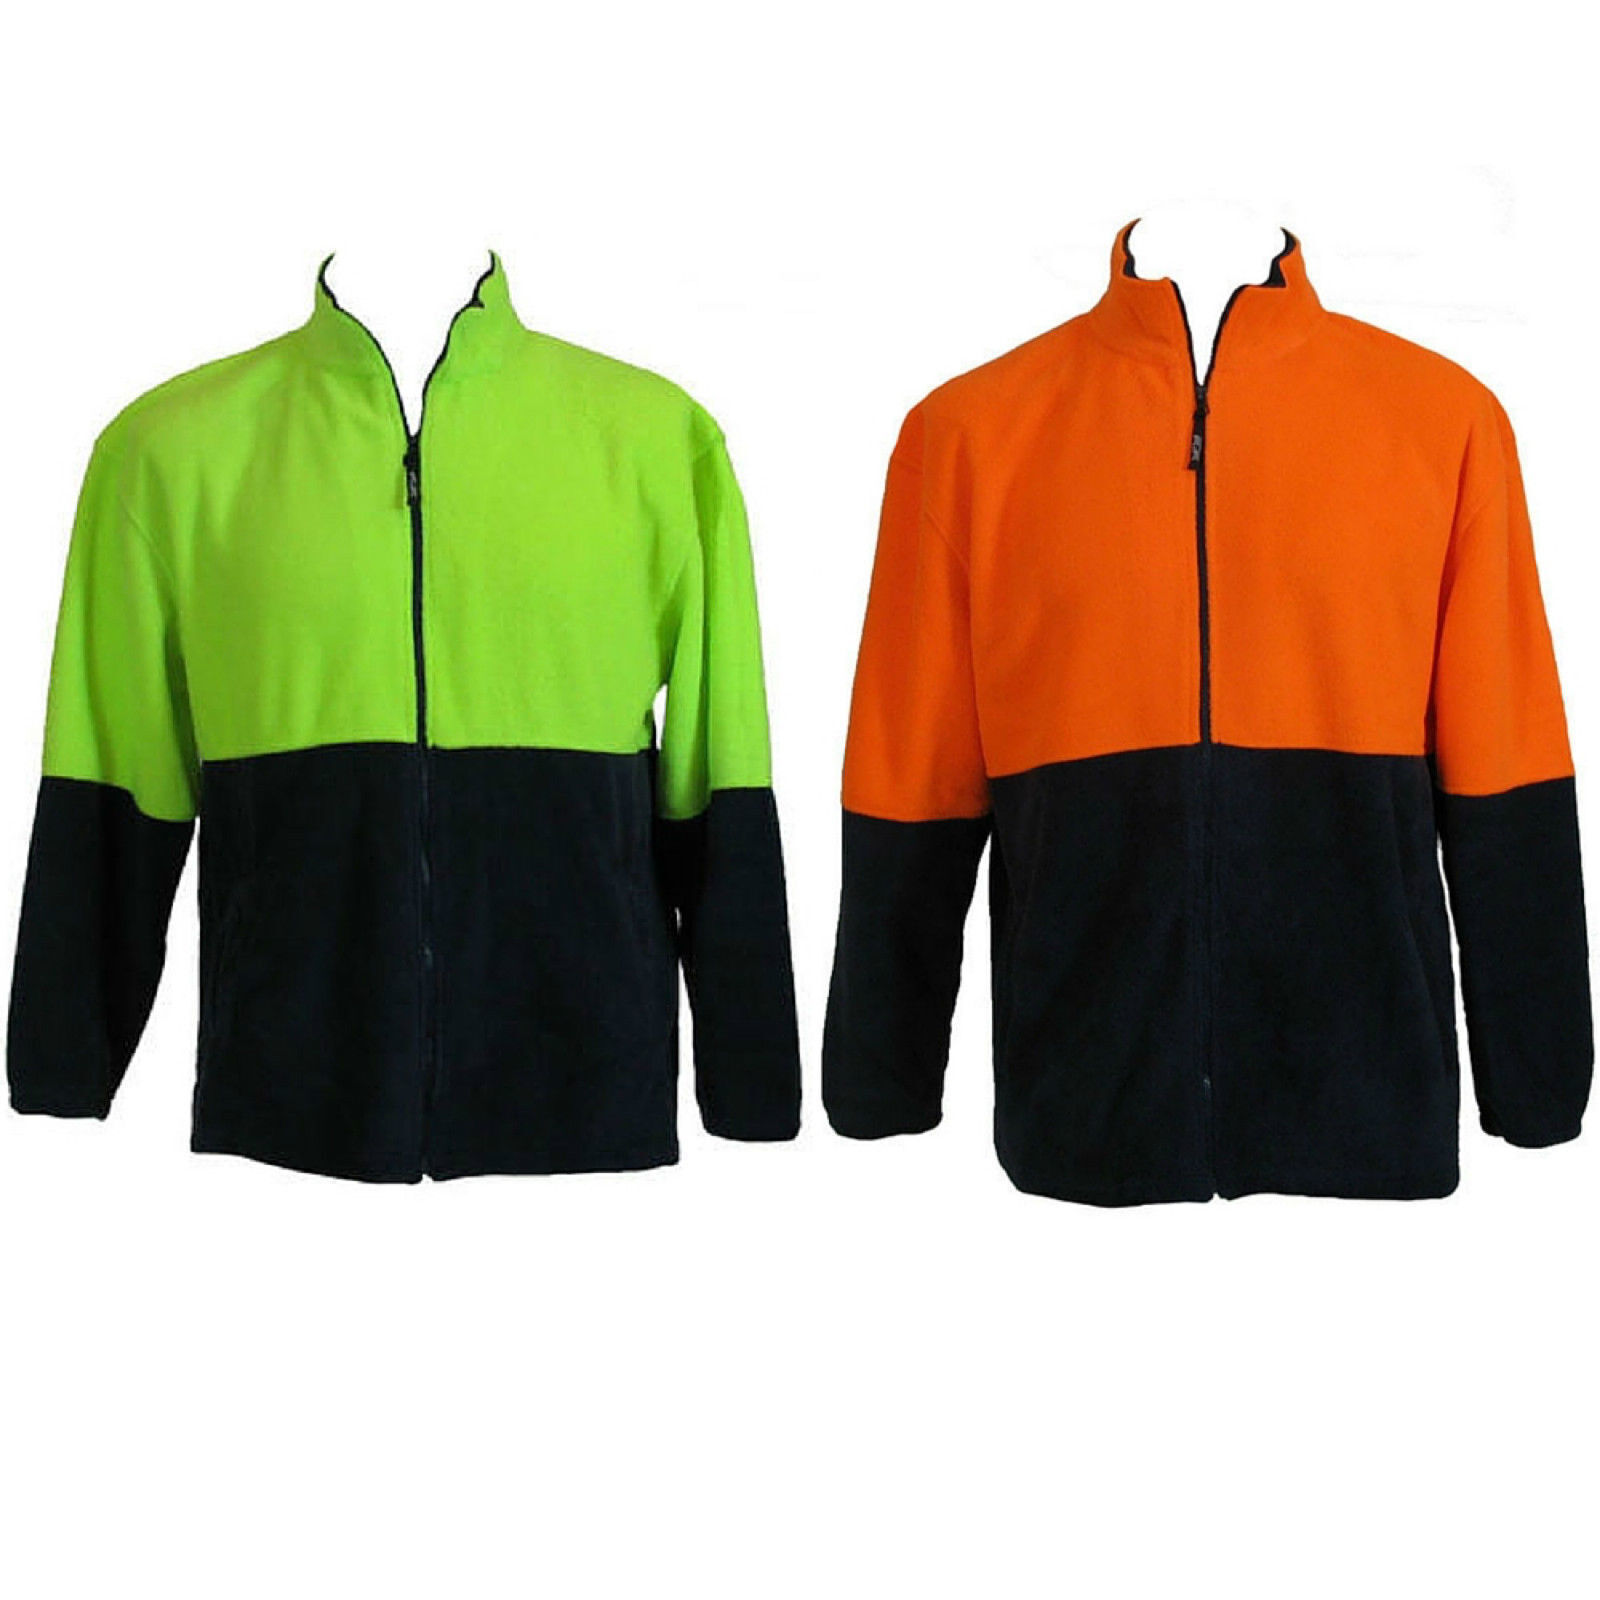 HI VIS POLAR FLEECE Jumper Full Zip Safety Workwear Fleecy Jacket Unisex - Orange - 4XL